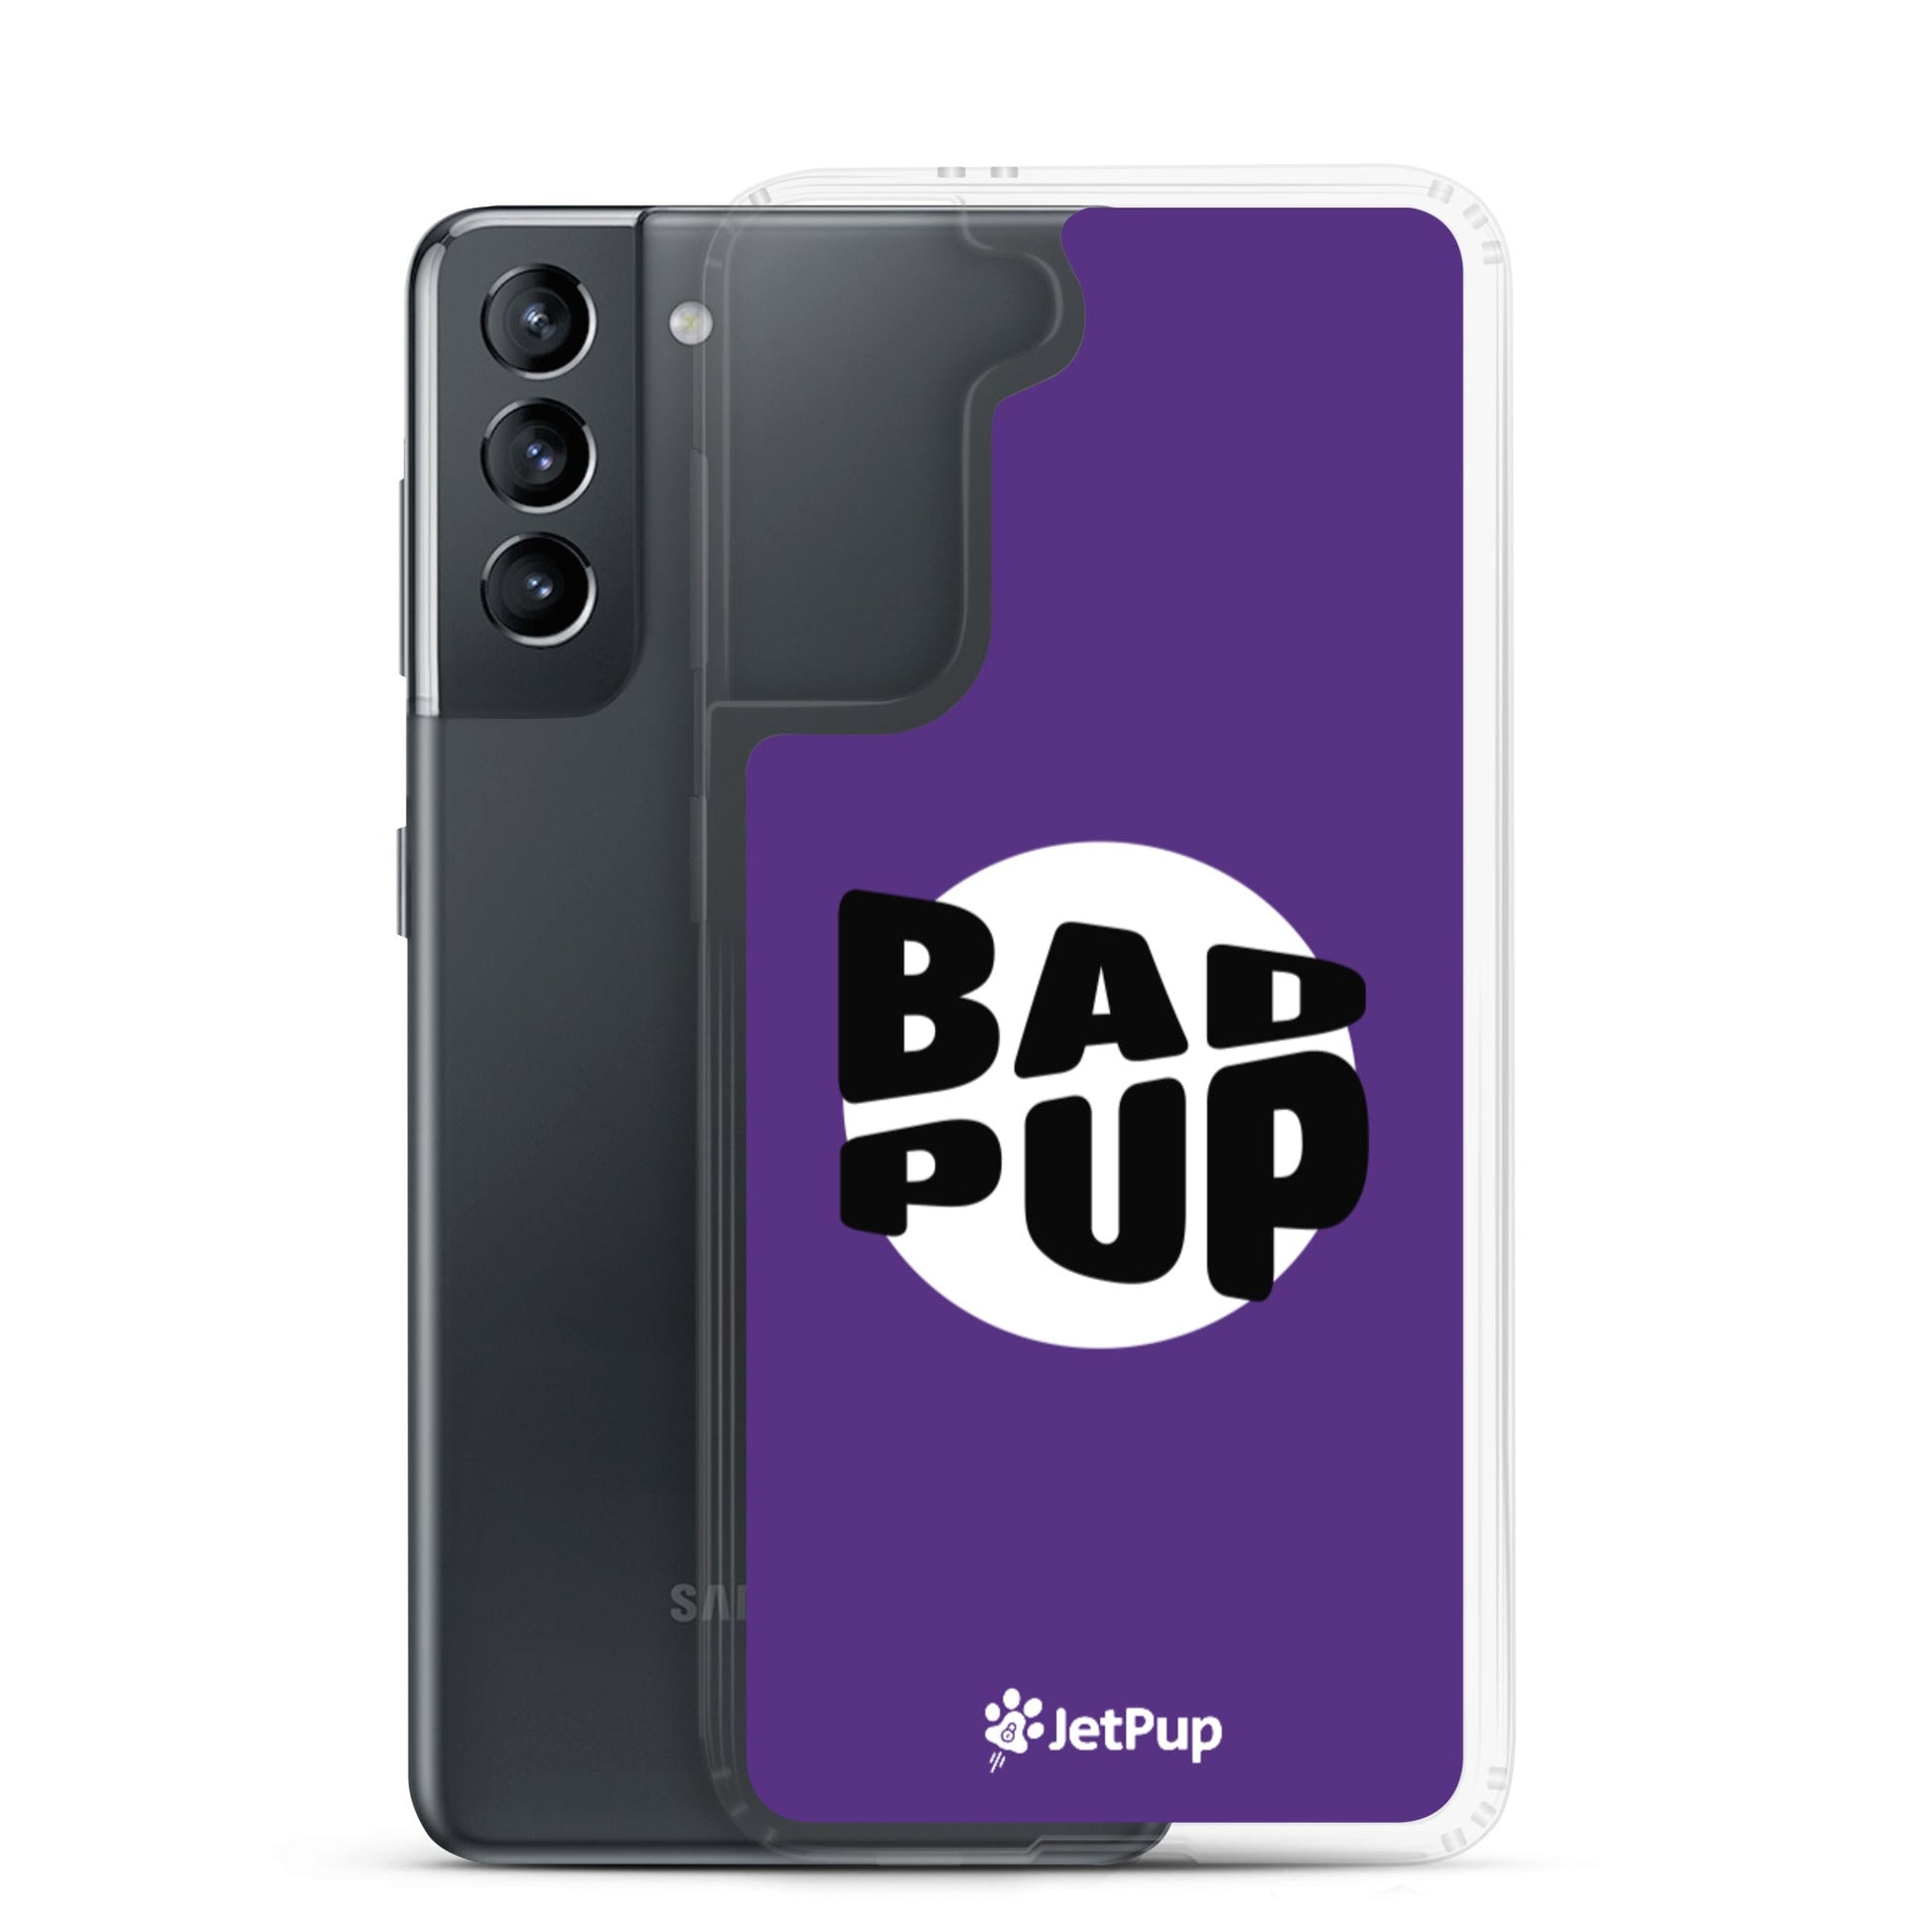 Bad Pup Samsung Case - Purple - JetPup